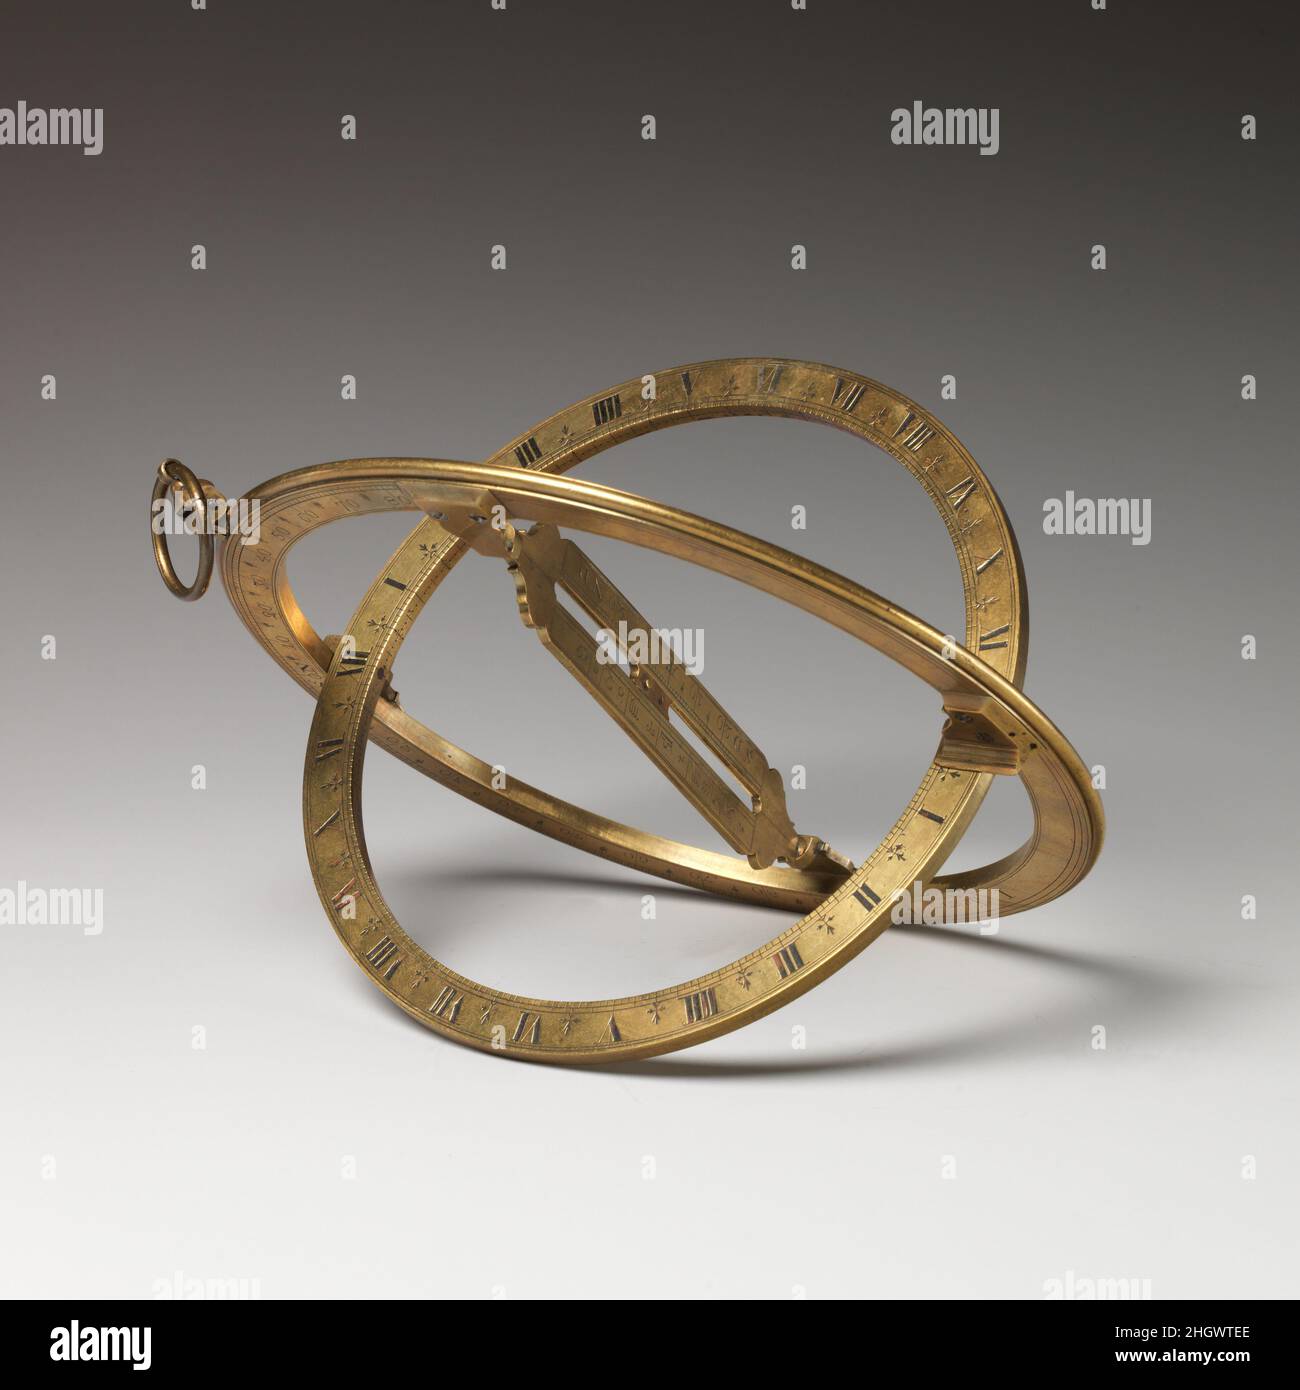 Universal-Ring Sonnenuhr 18th Jahrhundert Jonathan Sisson. Universal- Sonnenuhr mit Ring. Britisch. 18th Jahrhundert. Messing. Horologie  Stockfotografie - Alamy